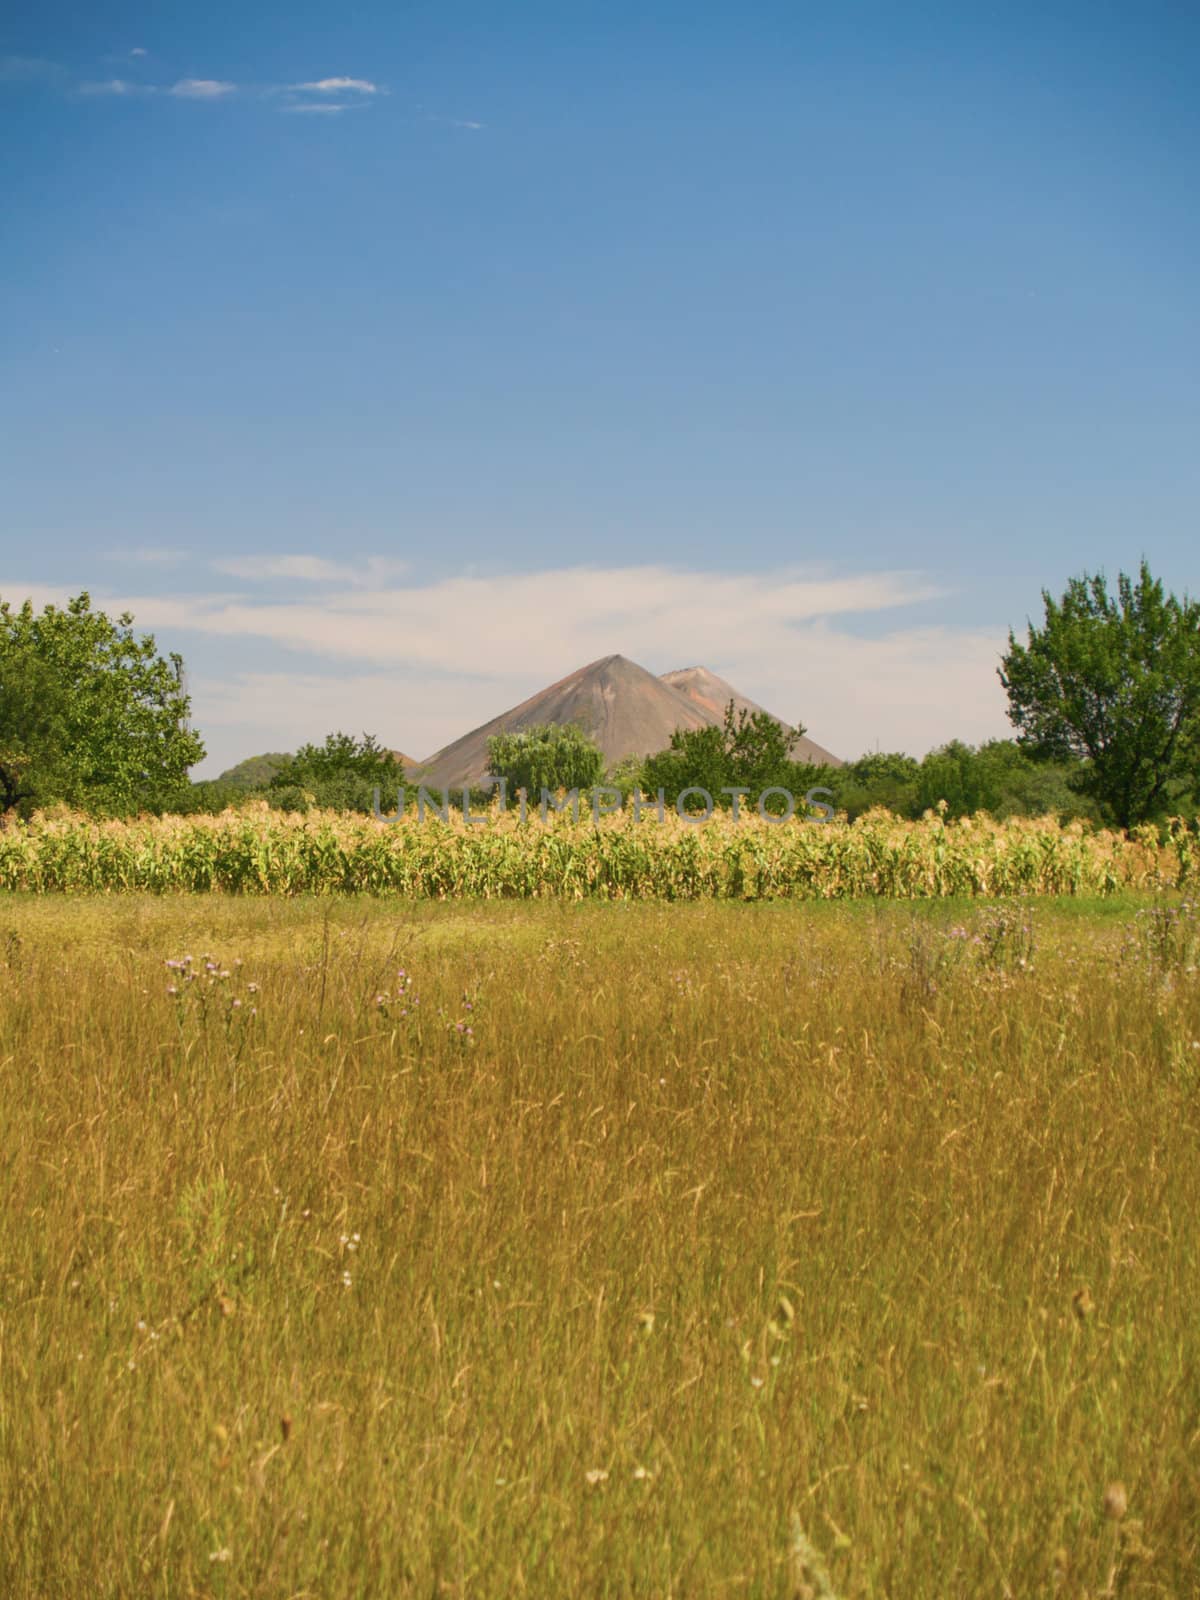 Ukrainian landscape with shlagheap (pit refuse heap) and corn field